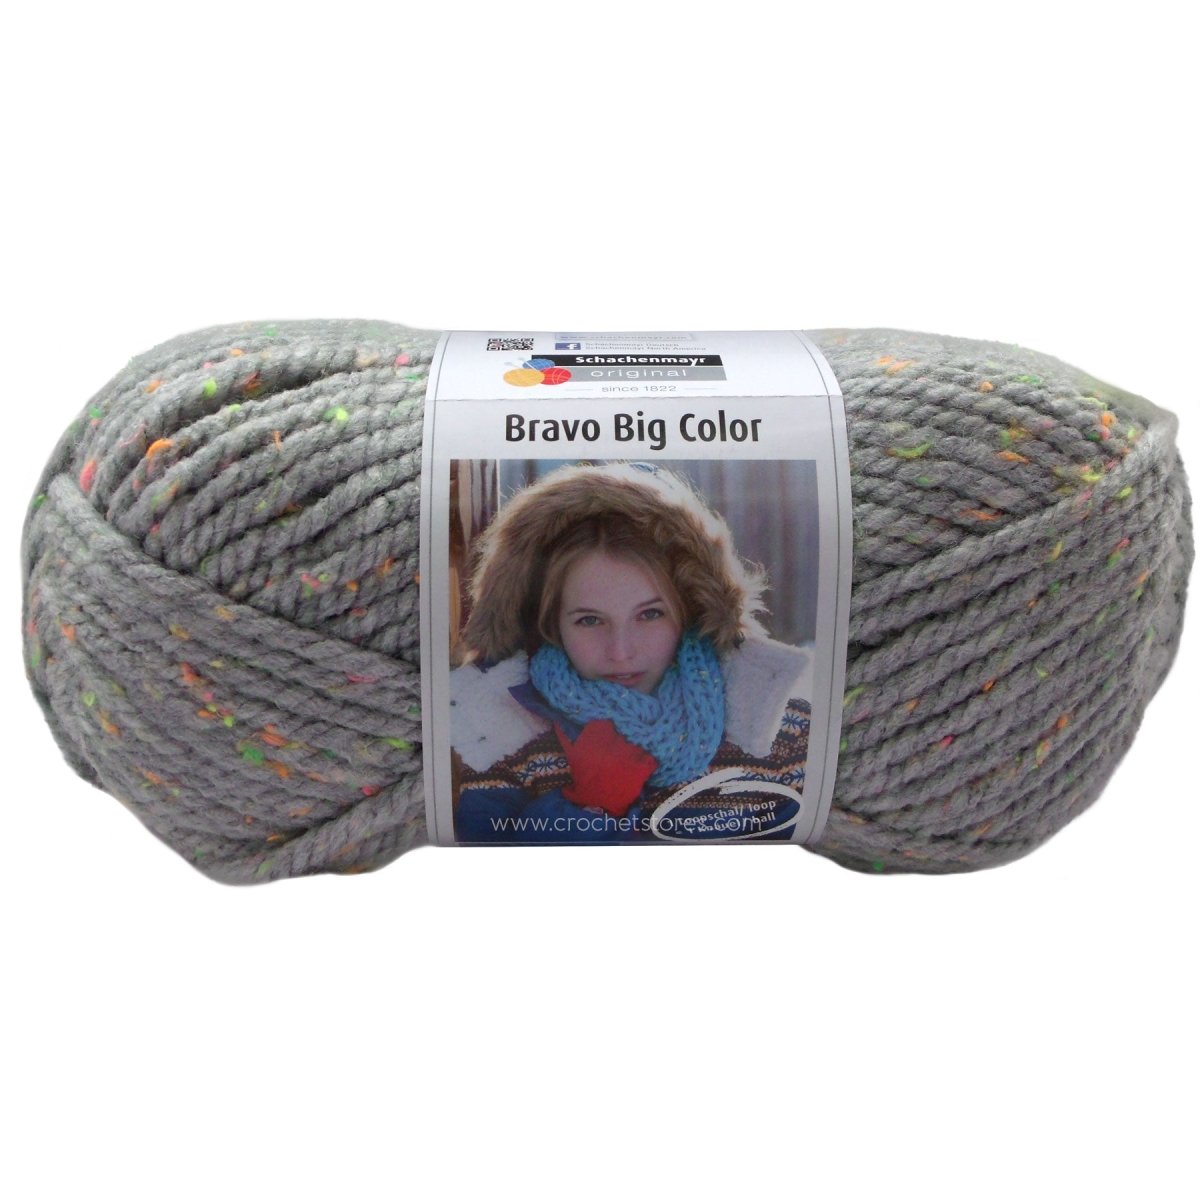 BRAVO BIG COLOR - Crochetstores9807720-1244053859065696